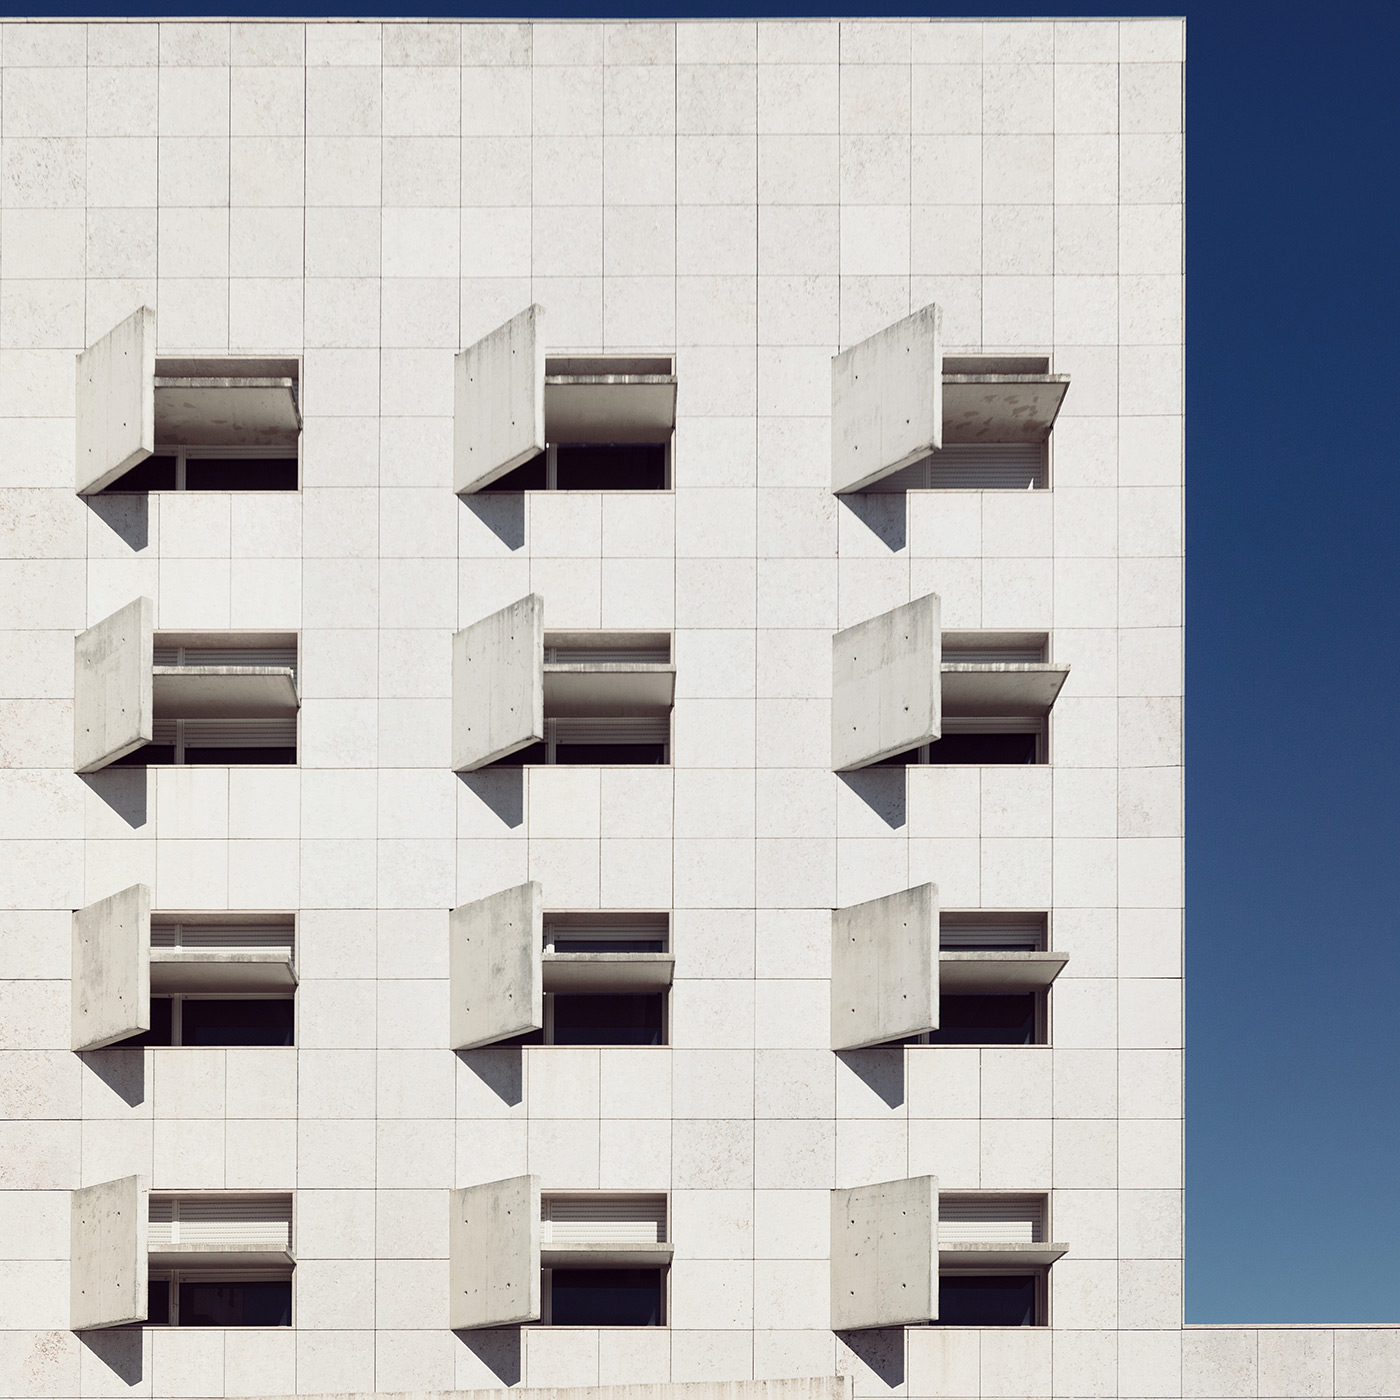 ISCTE University Institute of Lisbon . Location: Lisbon, Portugal . Architect: Raúl Hestnes Ferreira